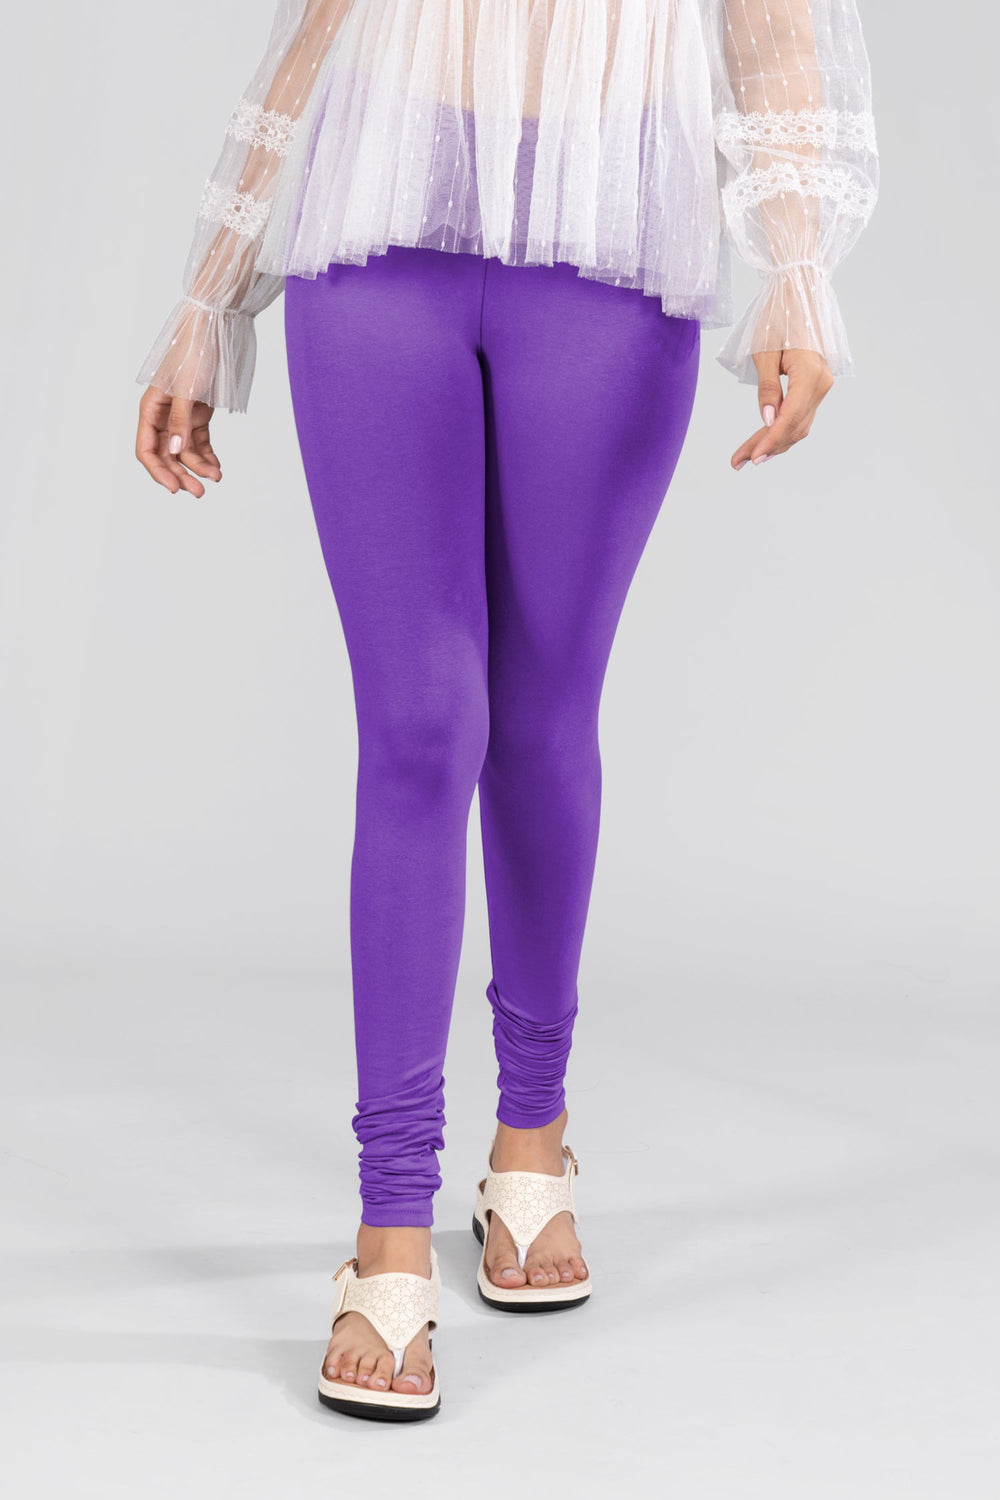 New Purple Cotton FullLength Leggings